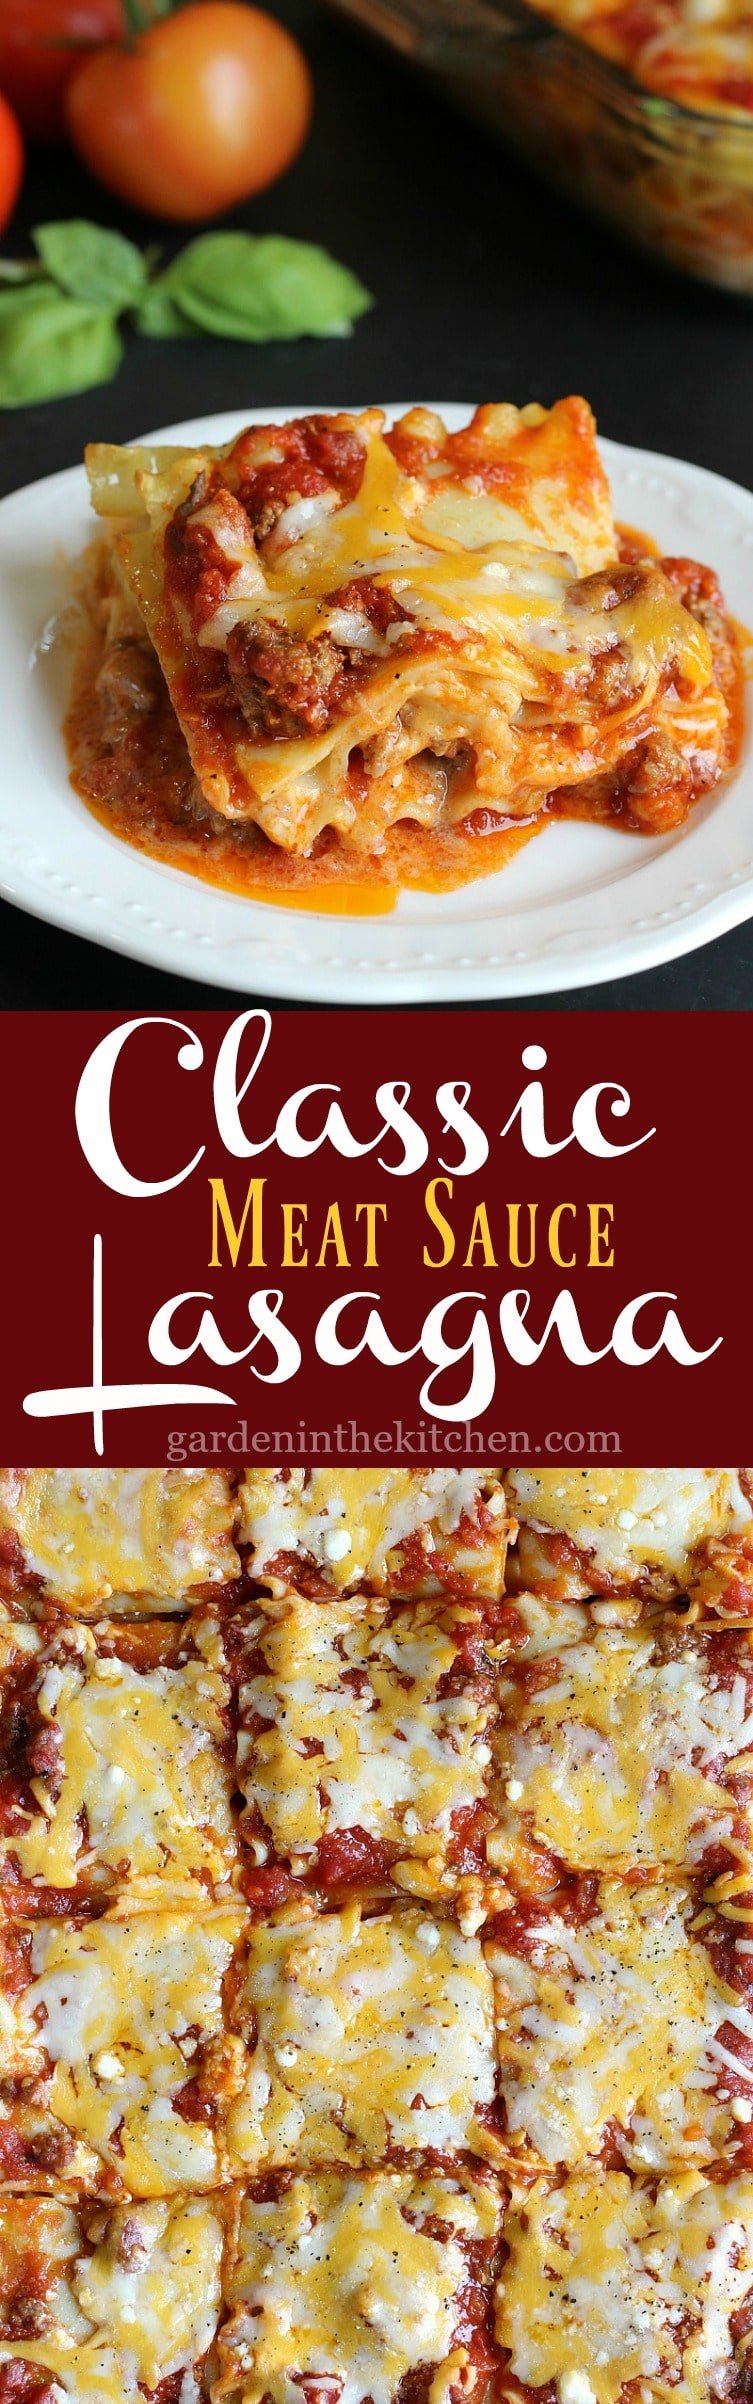 Classic Meat Sauce Lasagna